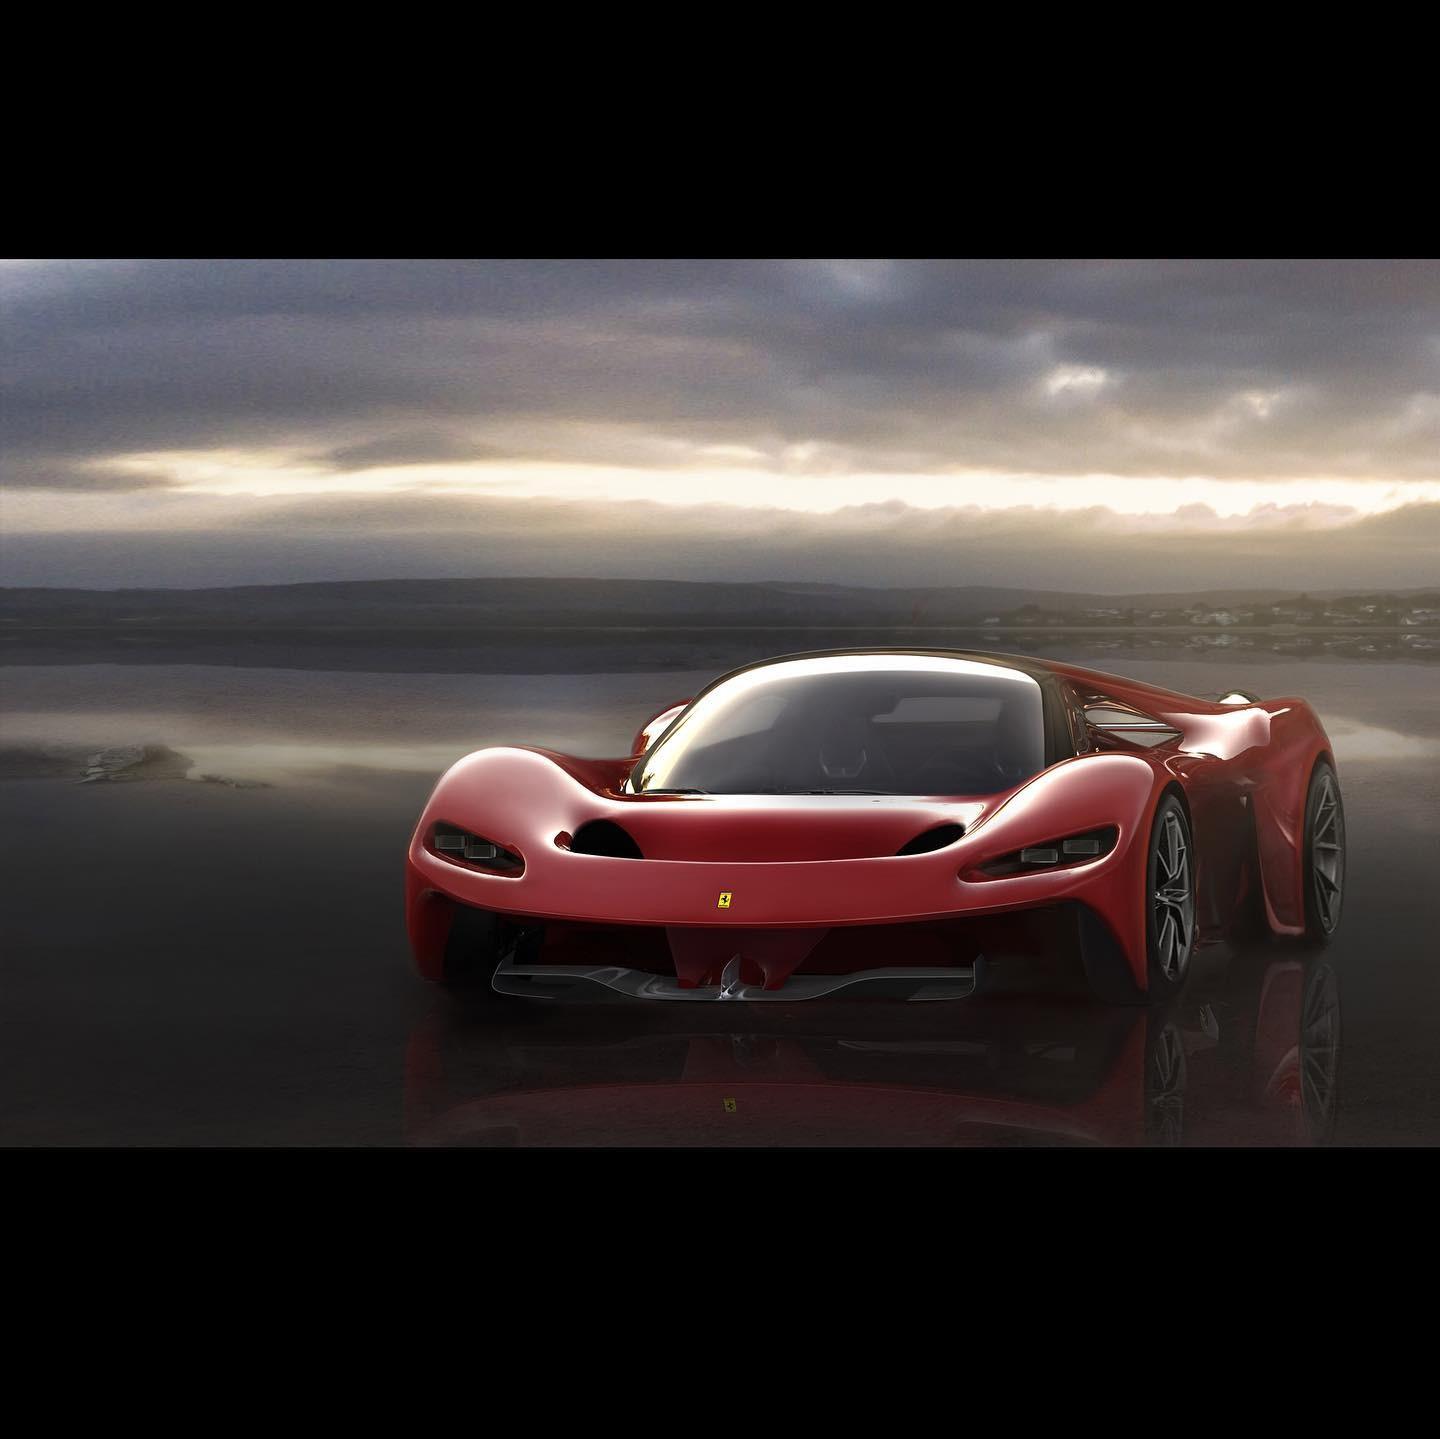 Futuristic Ice Powered Ferrari Hypercar Looks Ready To Show The